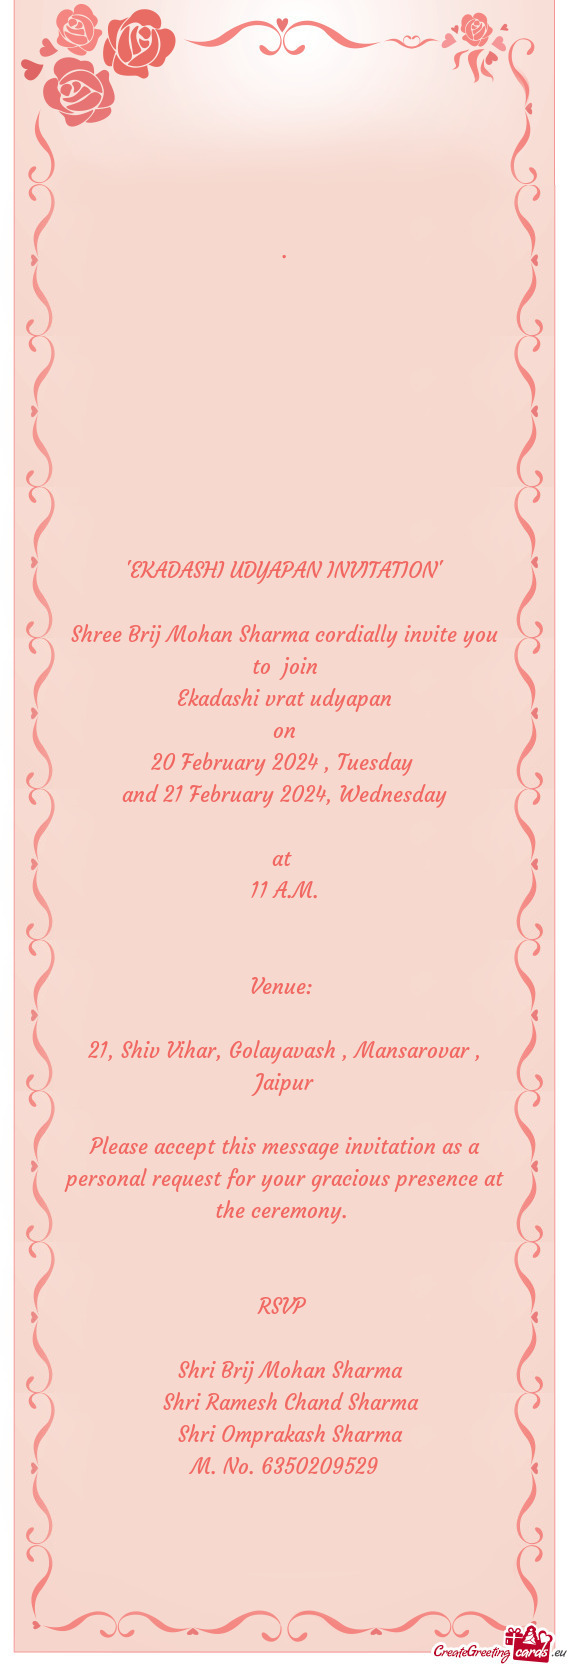 Shree Brij Mohan Sharma cordially invite you